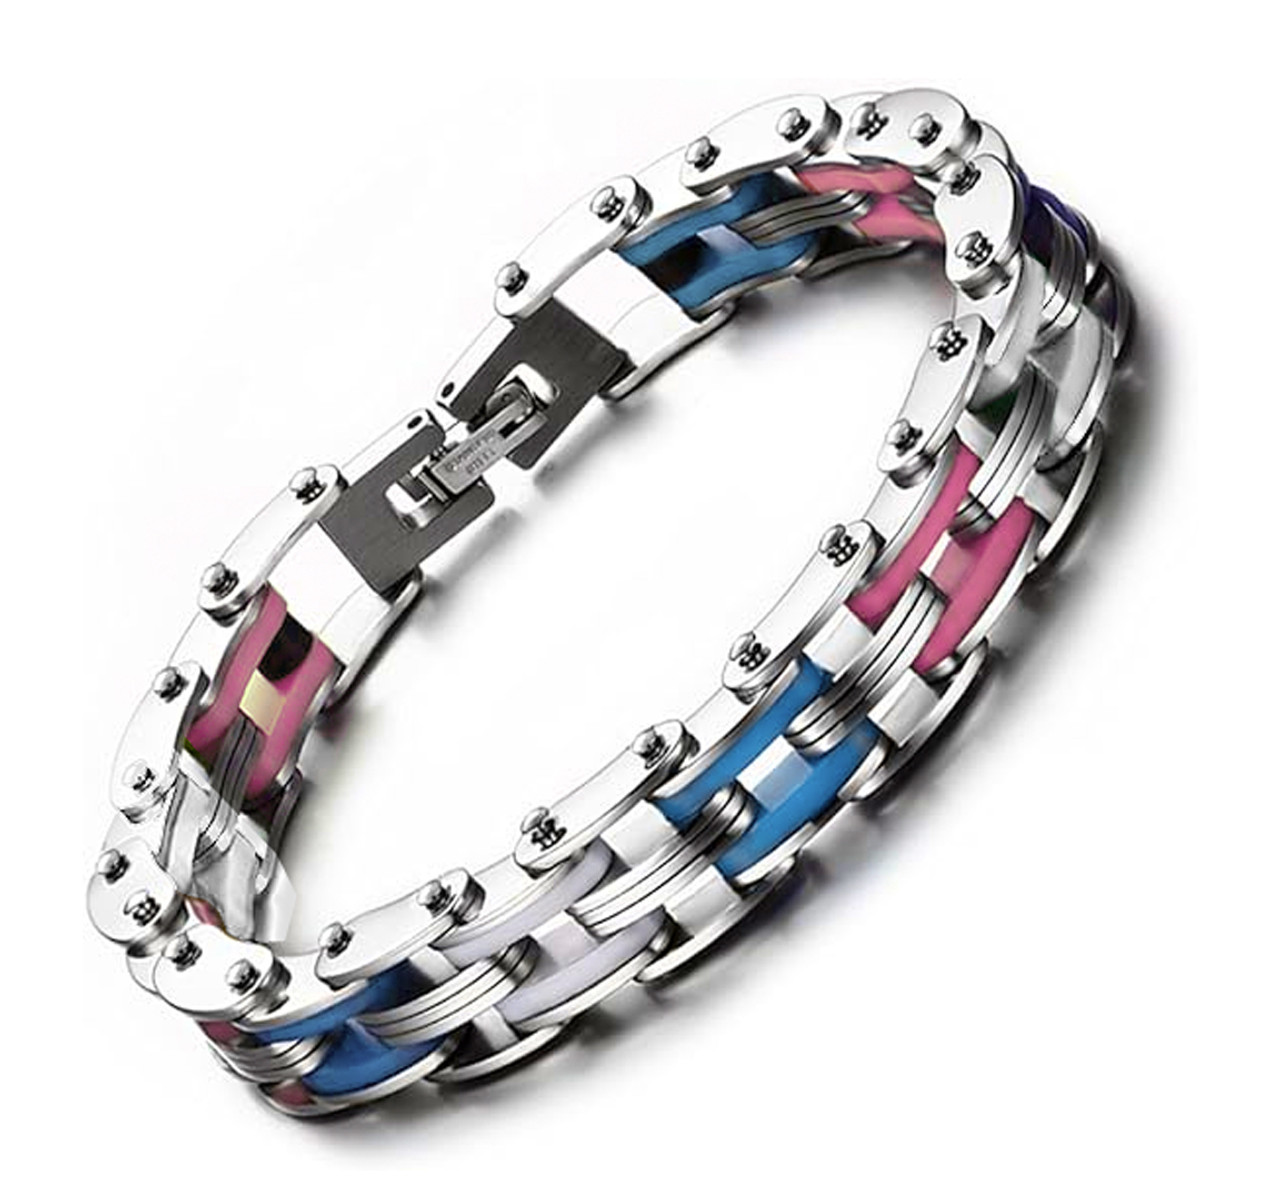 Transgender Pride Stainless Steel Bracelet Bike Gear Chain Wristlet - LGBTQ Pride Wristband with Transgender Flag Colors, Trans Pride Jewelry Store / Shop